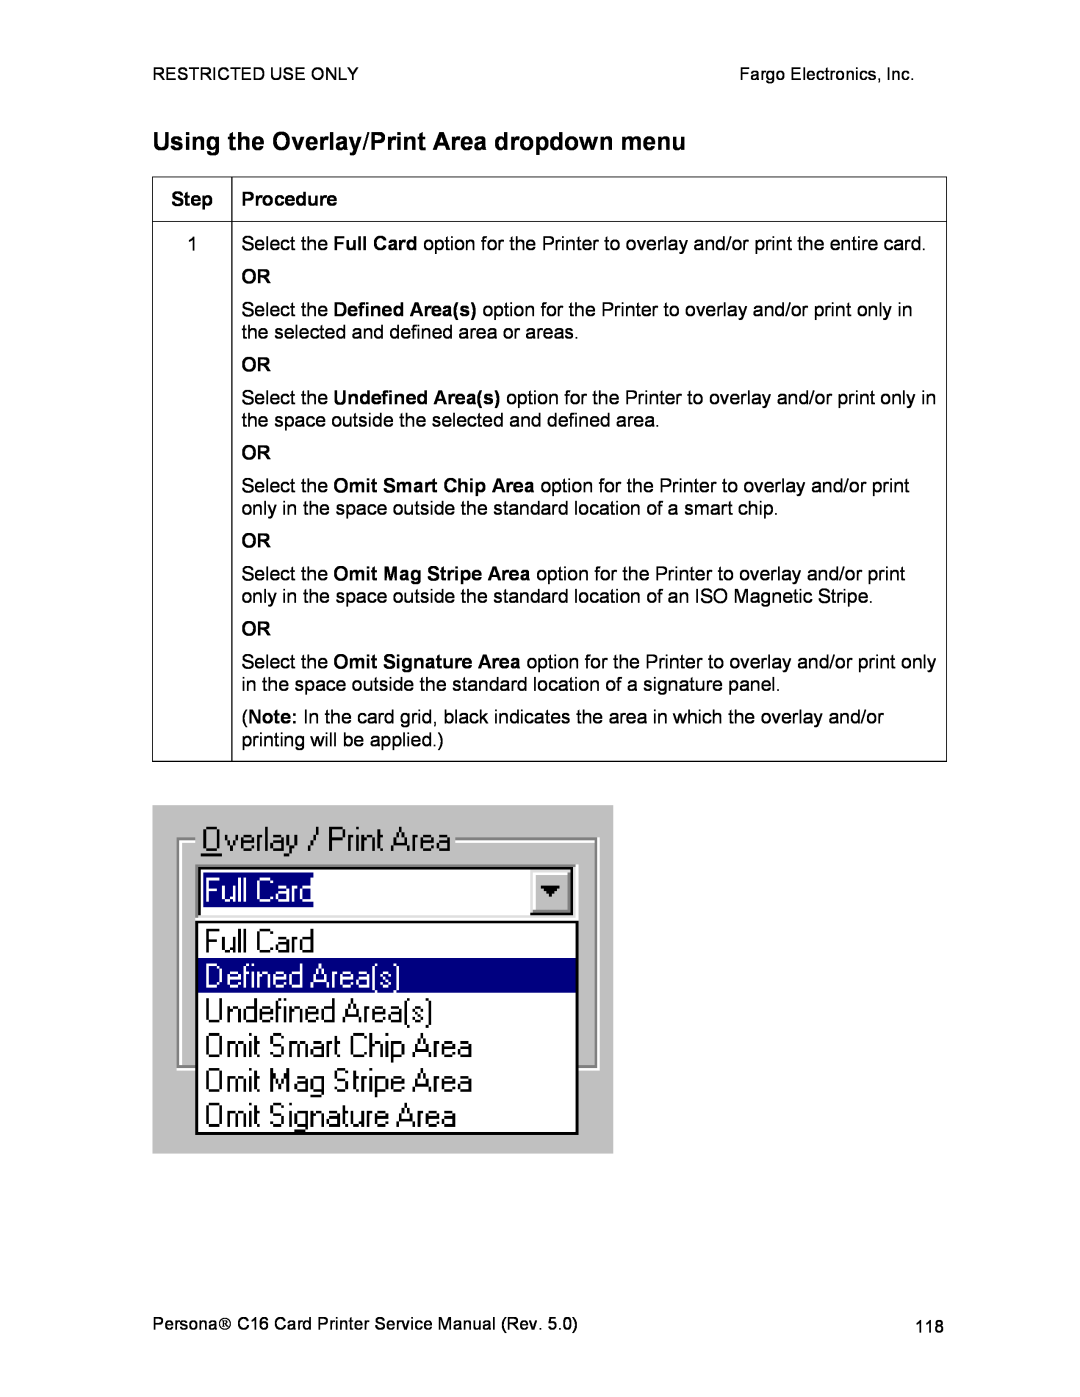 FARGO electronic C16 service manual Using the Overlay/Print Area dropdown menu 